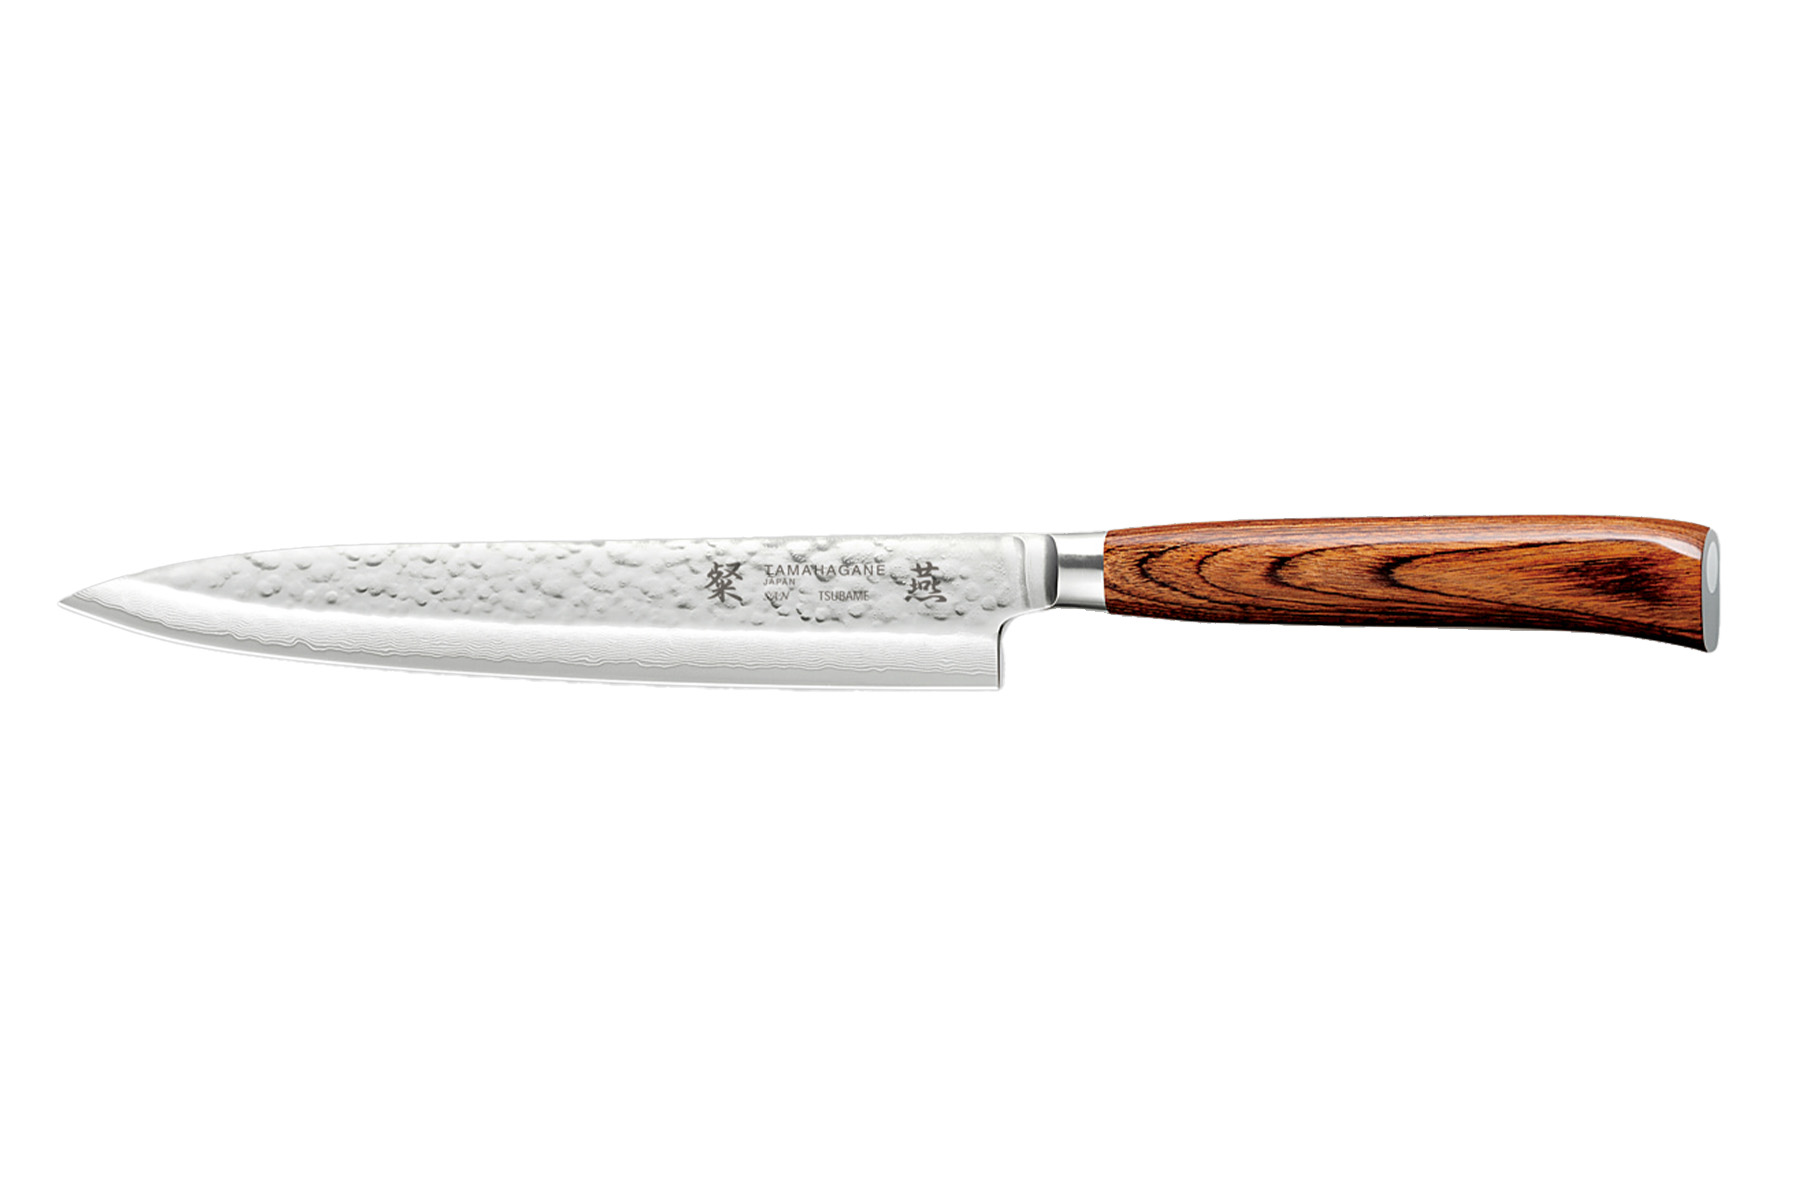 Couteau japonais Tamahagane Tsubame pakkawood - couteau sashimi 21 cm